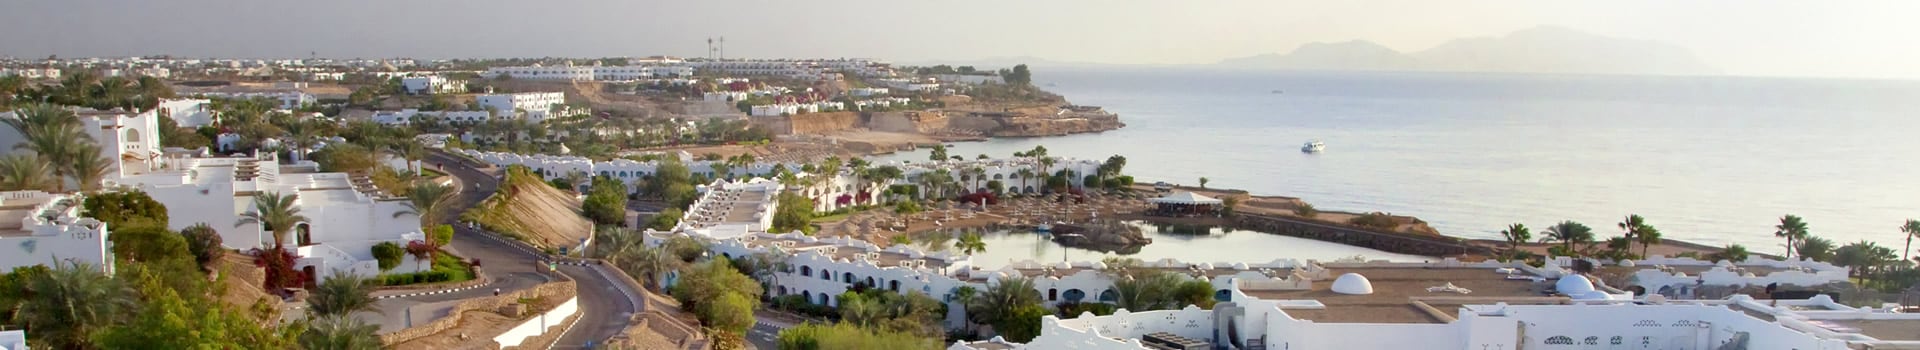 Vérone - Sharm el sheikh - ophira